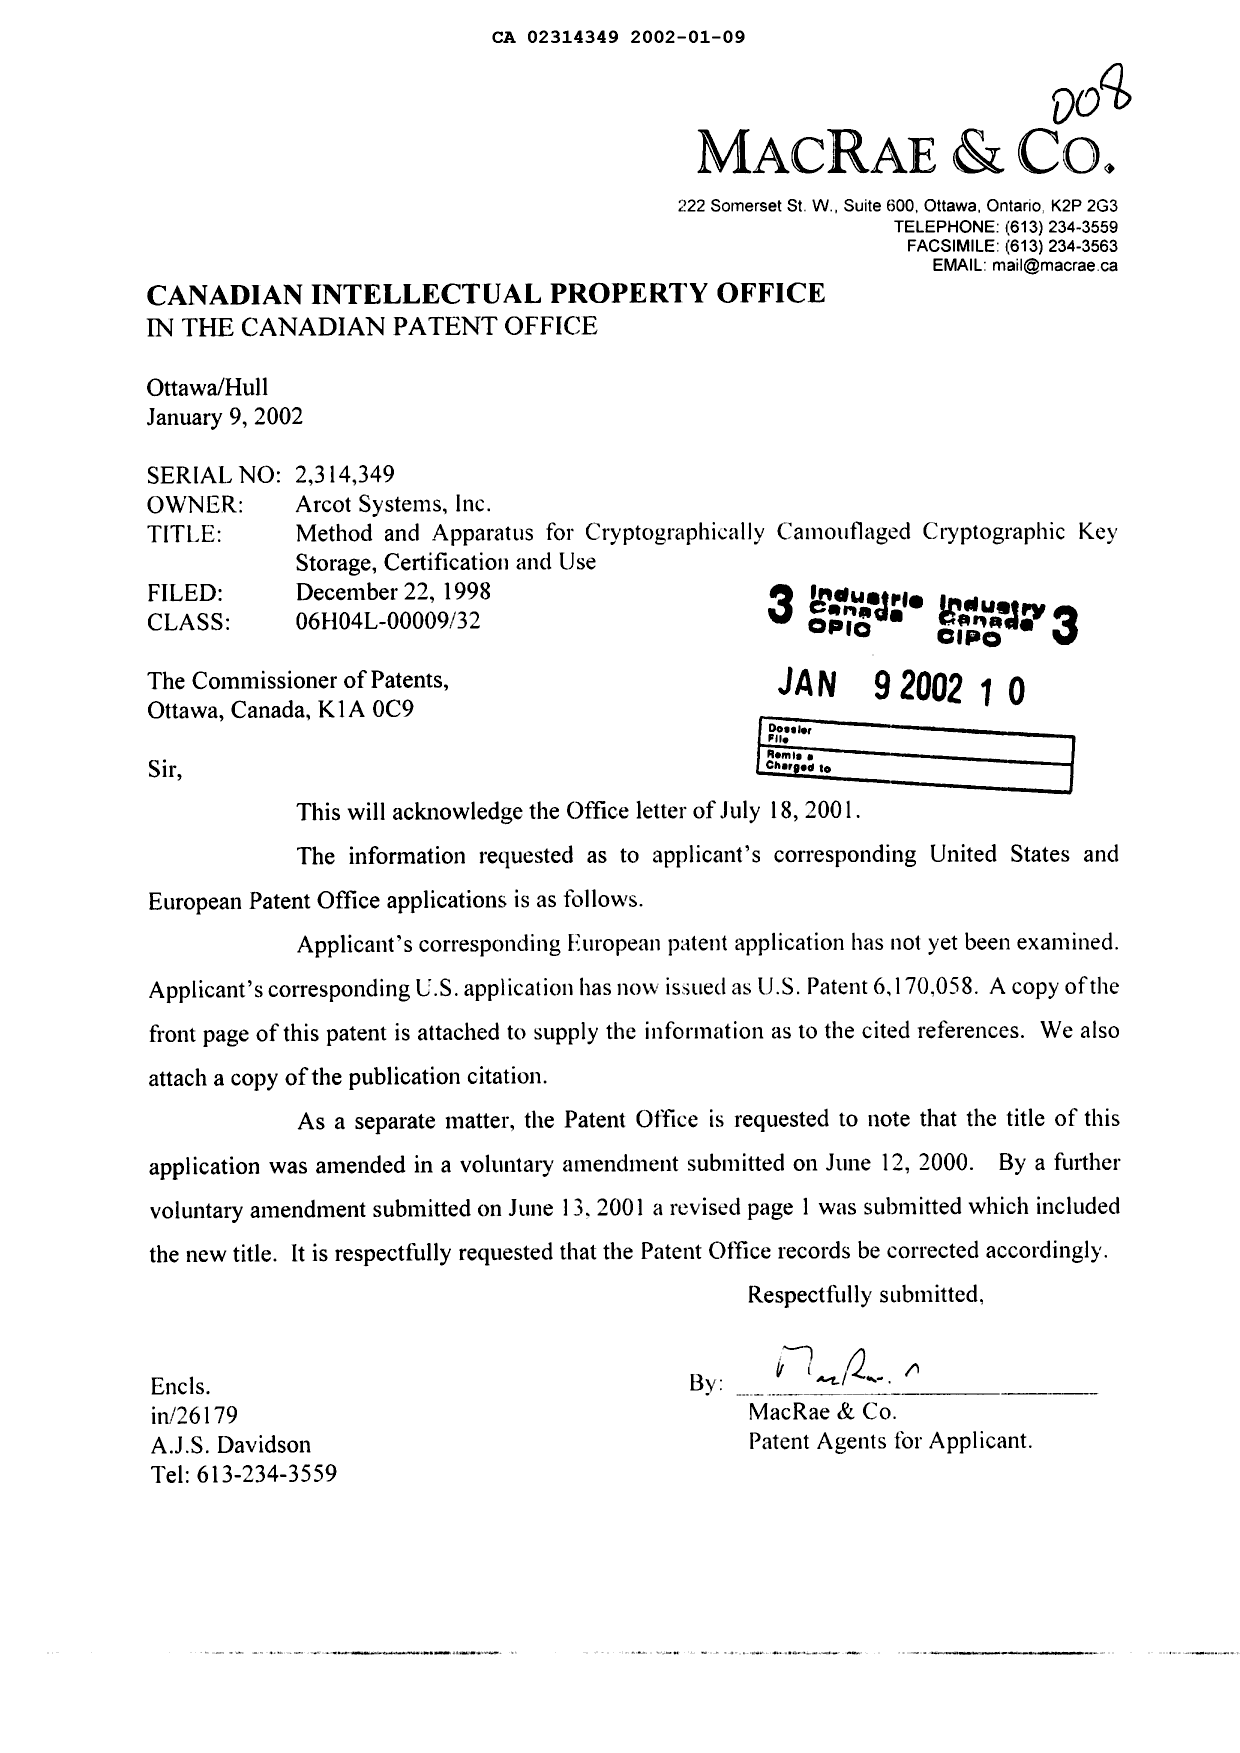 Canadian Patent Document 2314349. Prosecution-Amendment 20020109. Image 1 of 1